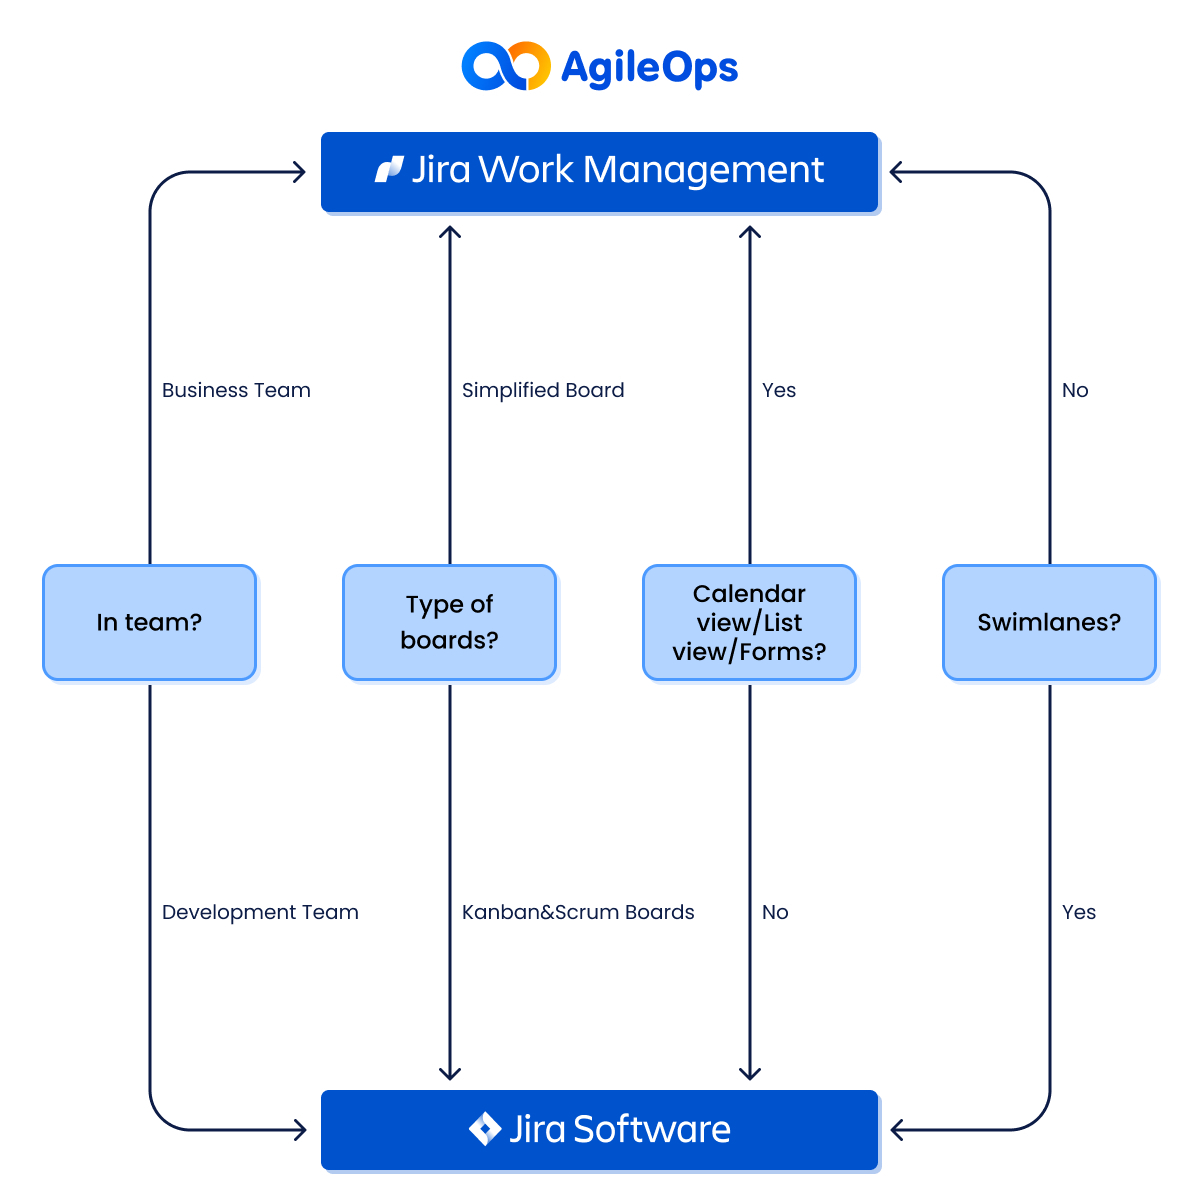 AgileOps - So sánh Jira Work Management và Jira Software